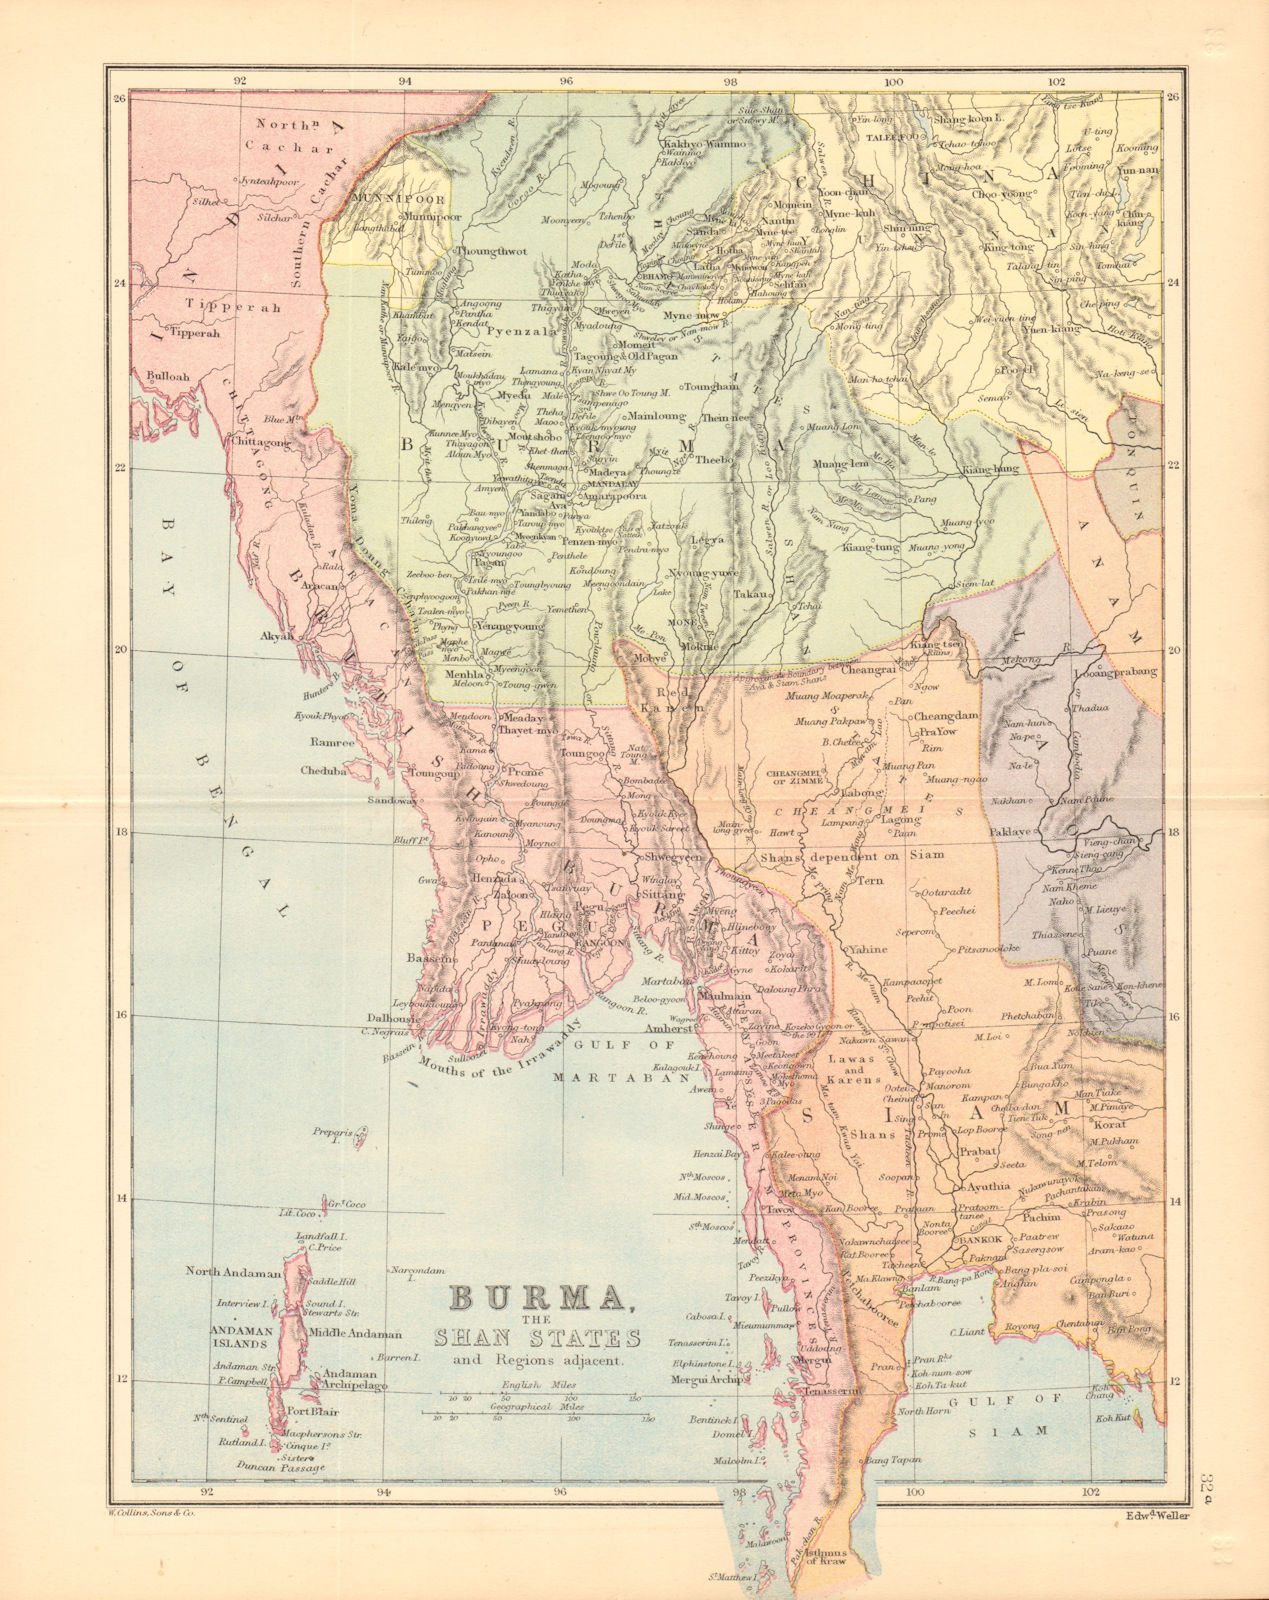 INDOCHINA. 'Burma [&] the Shan States' Manipoor Siam Chang Mai Bangkok 1876 map